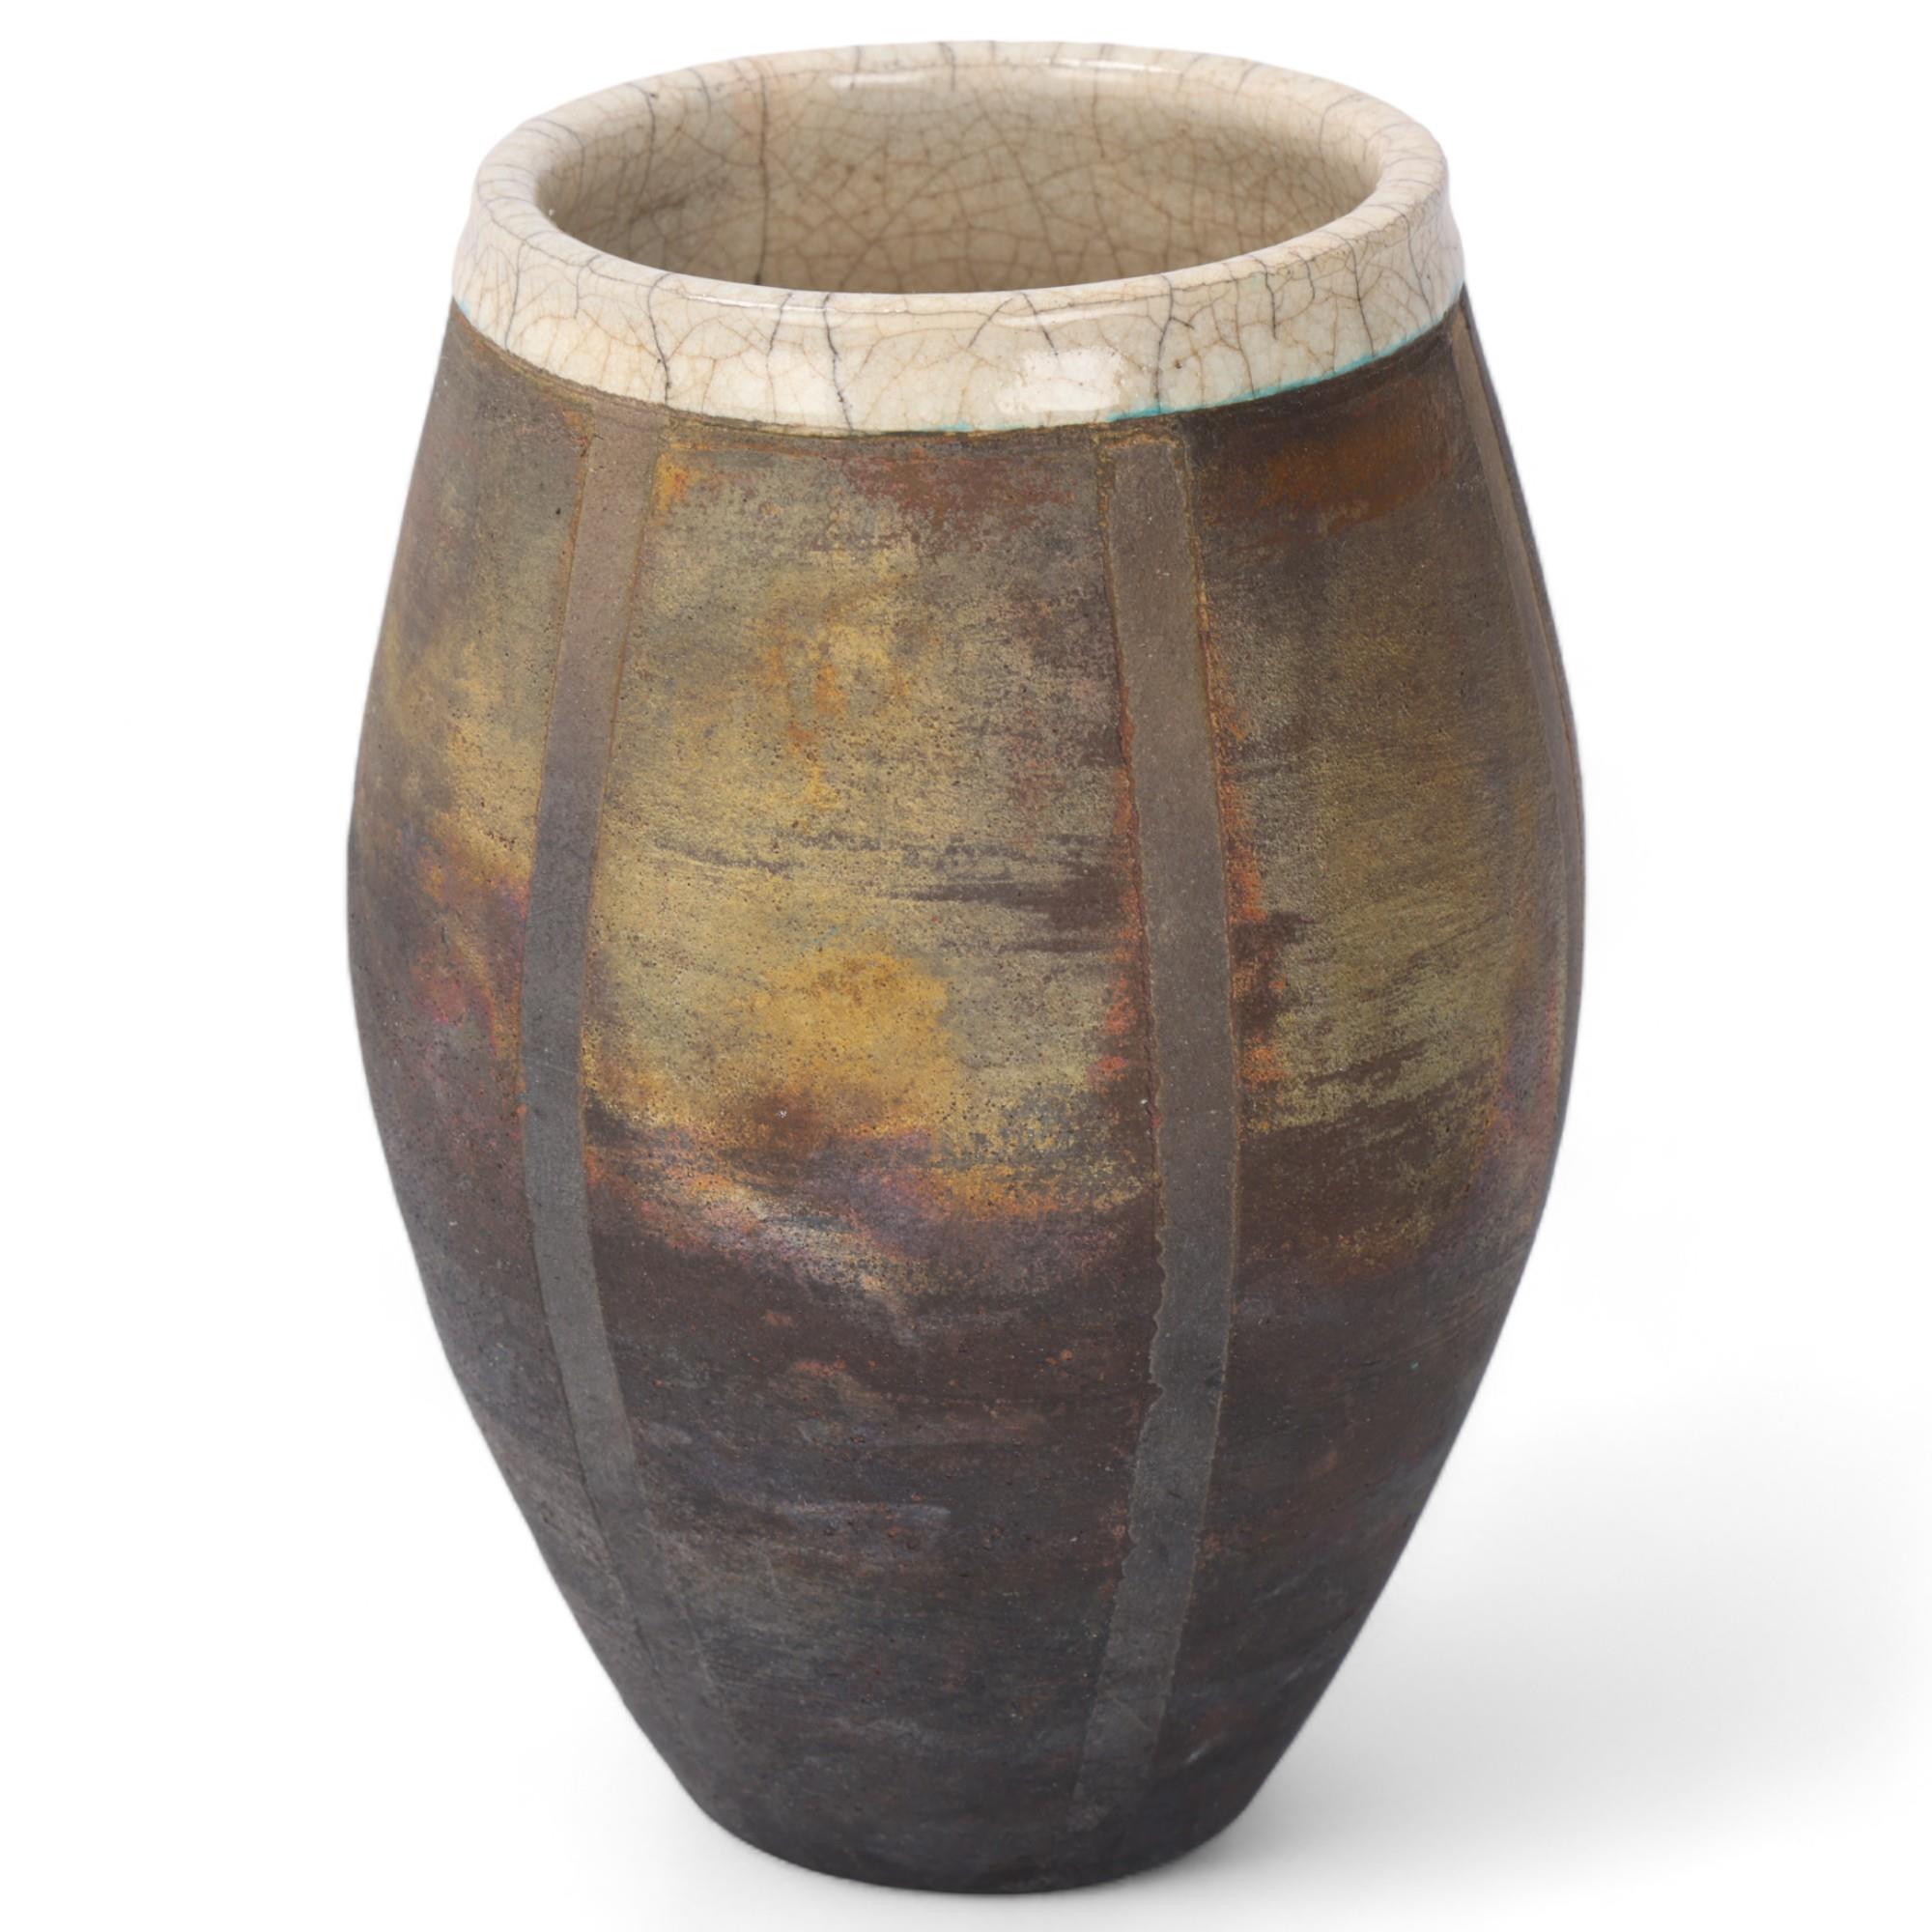 A studio pottery raku fired barrel vase, with resist stripes and crackle glaze interior, makers mark